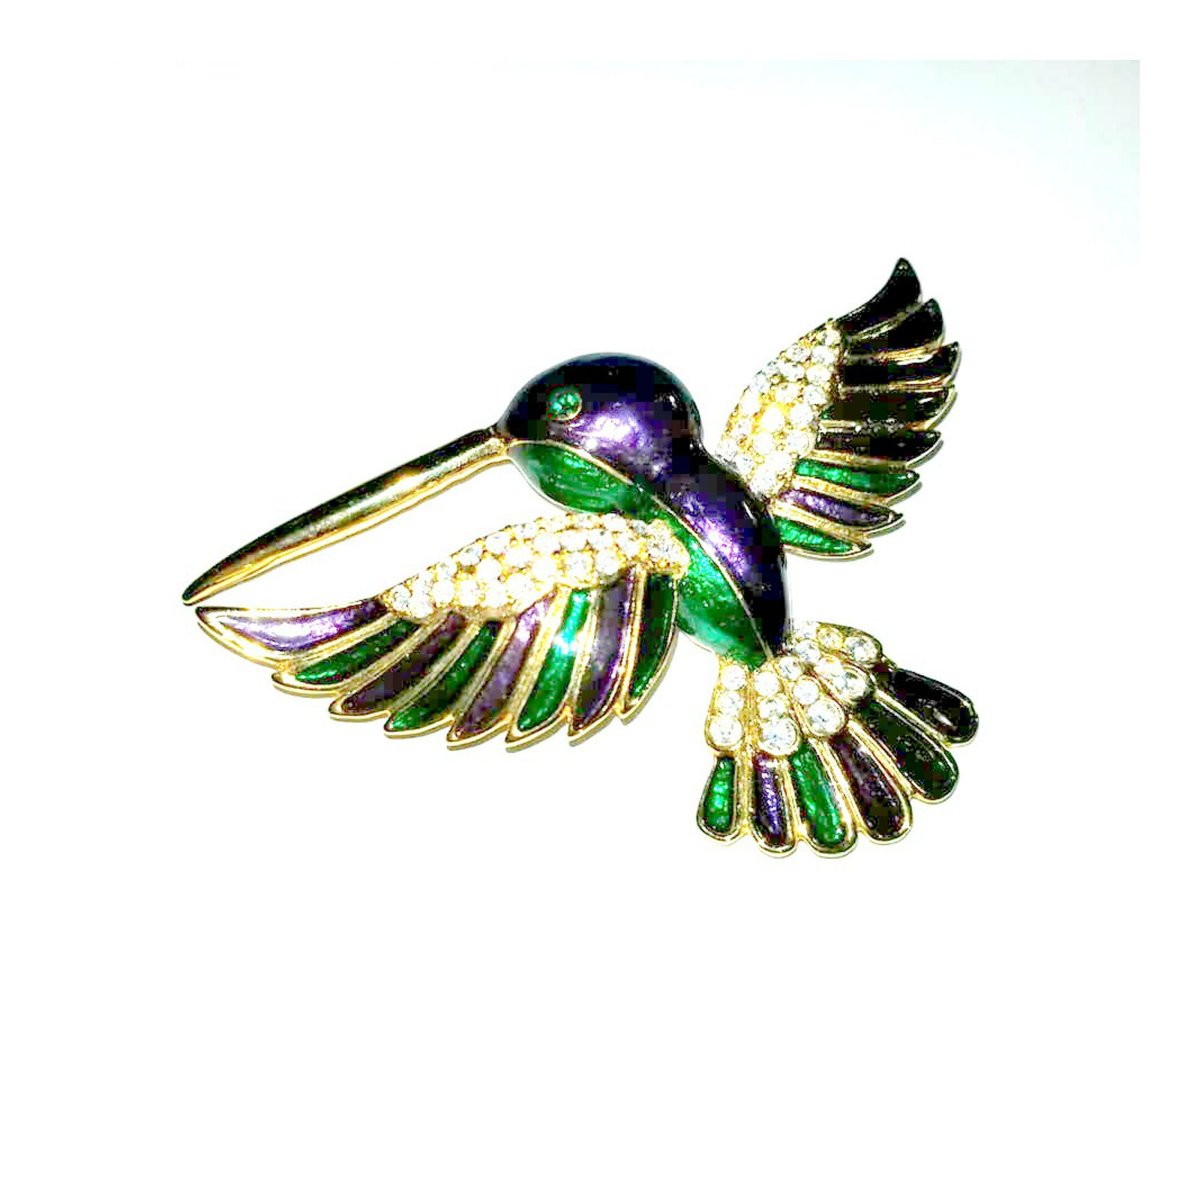 Vintage  Enamel & Crystal Hummingbird Brooch LARGE, Free Shipping tuppu.net/a18453aa #JunkYardBlonde #Etsy #UniqueJewelry